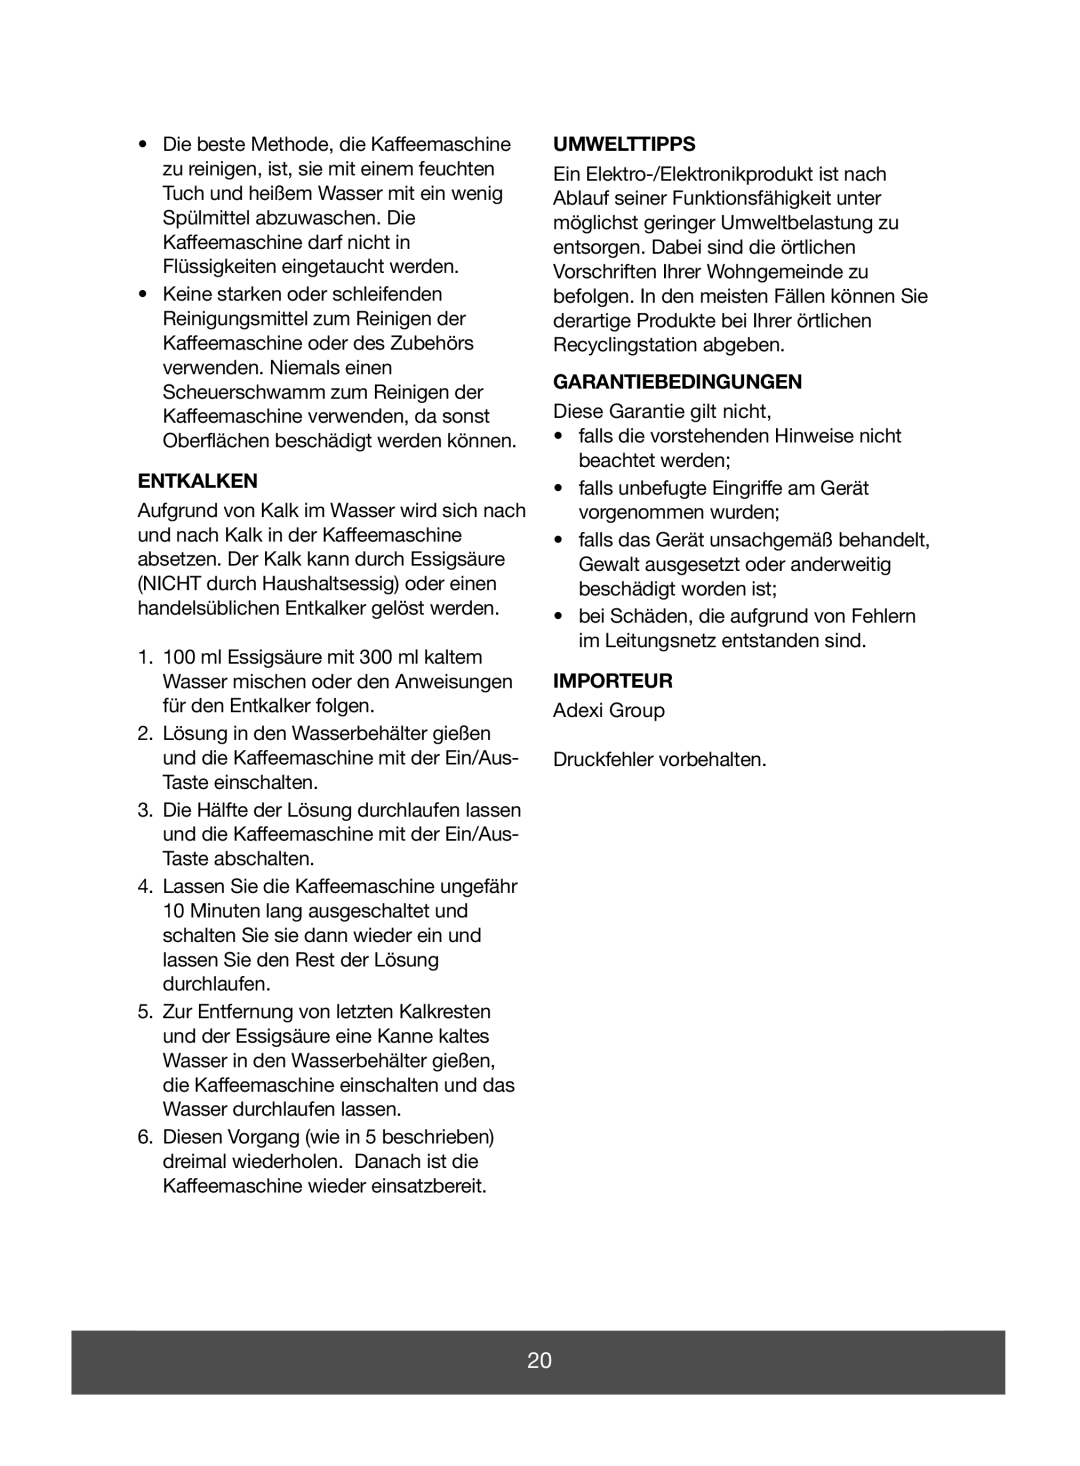 Melissa 645-075 manual Entkalken, Umwelttipps, Garantiebedingungen, Importeur 